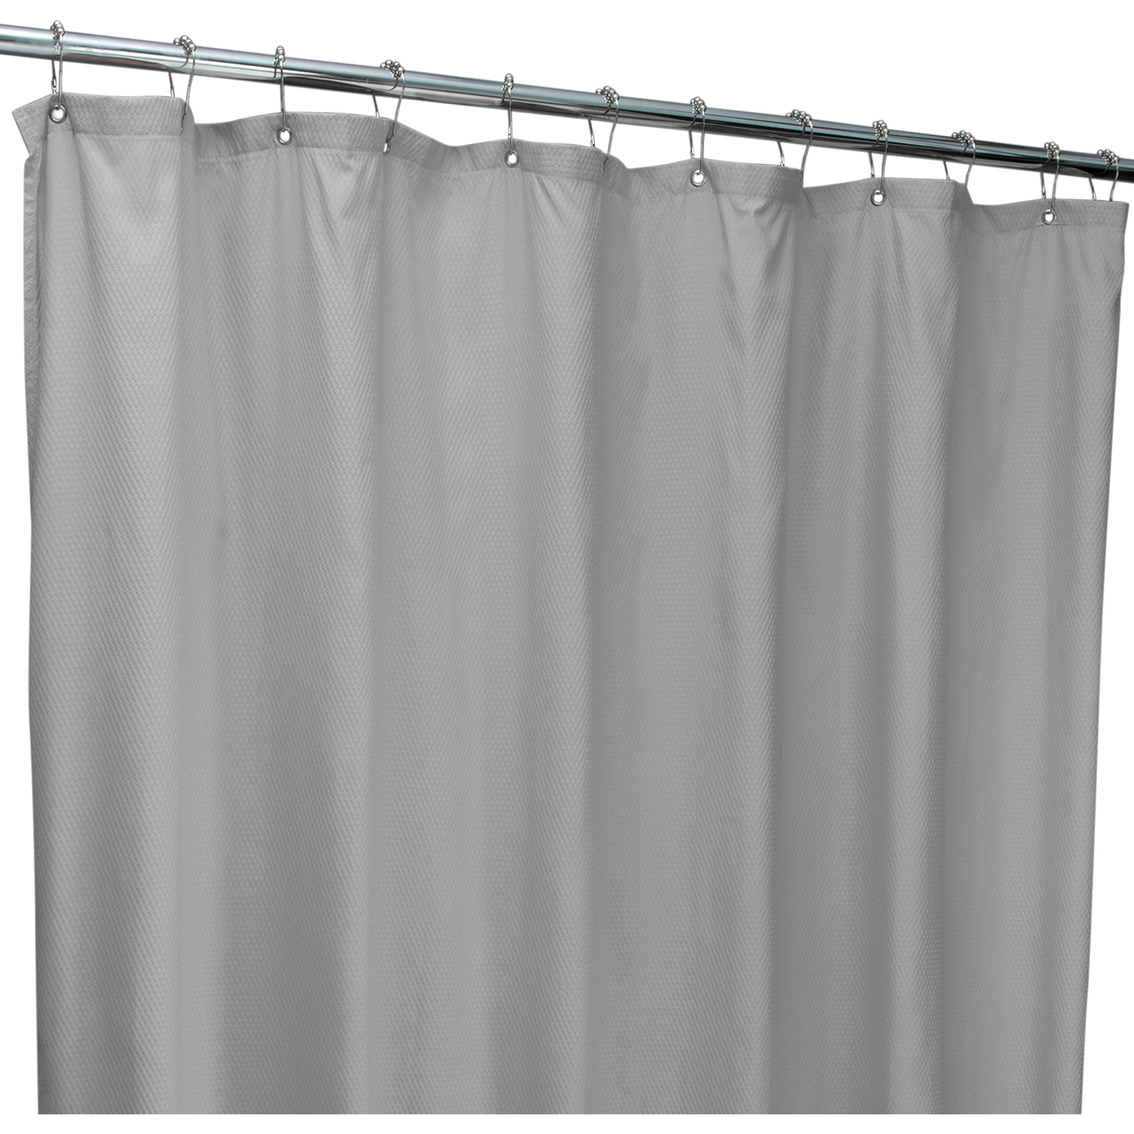 Bath Bliss Microfiber Soft Touch Diamond Design Shower Curtain Liner - Image 2 of 4